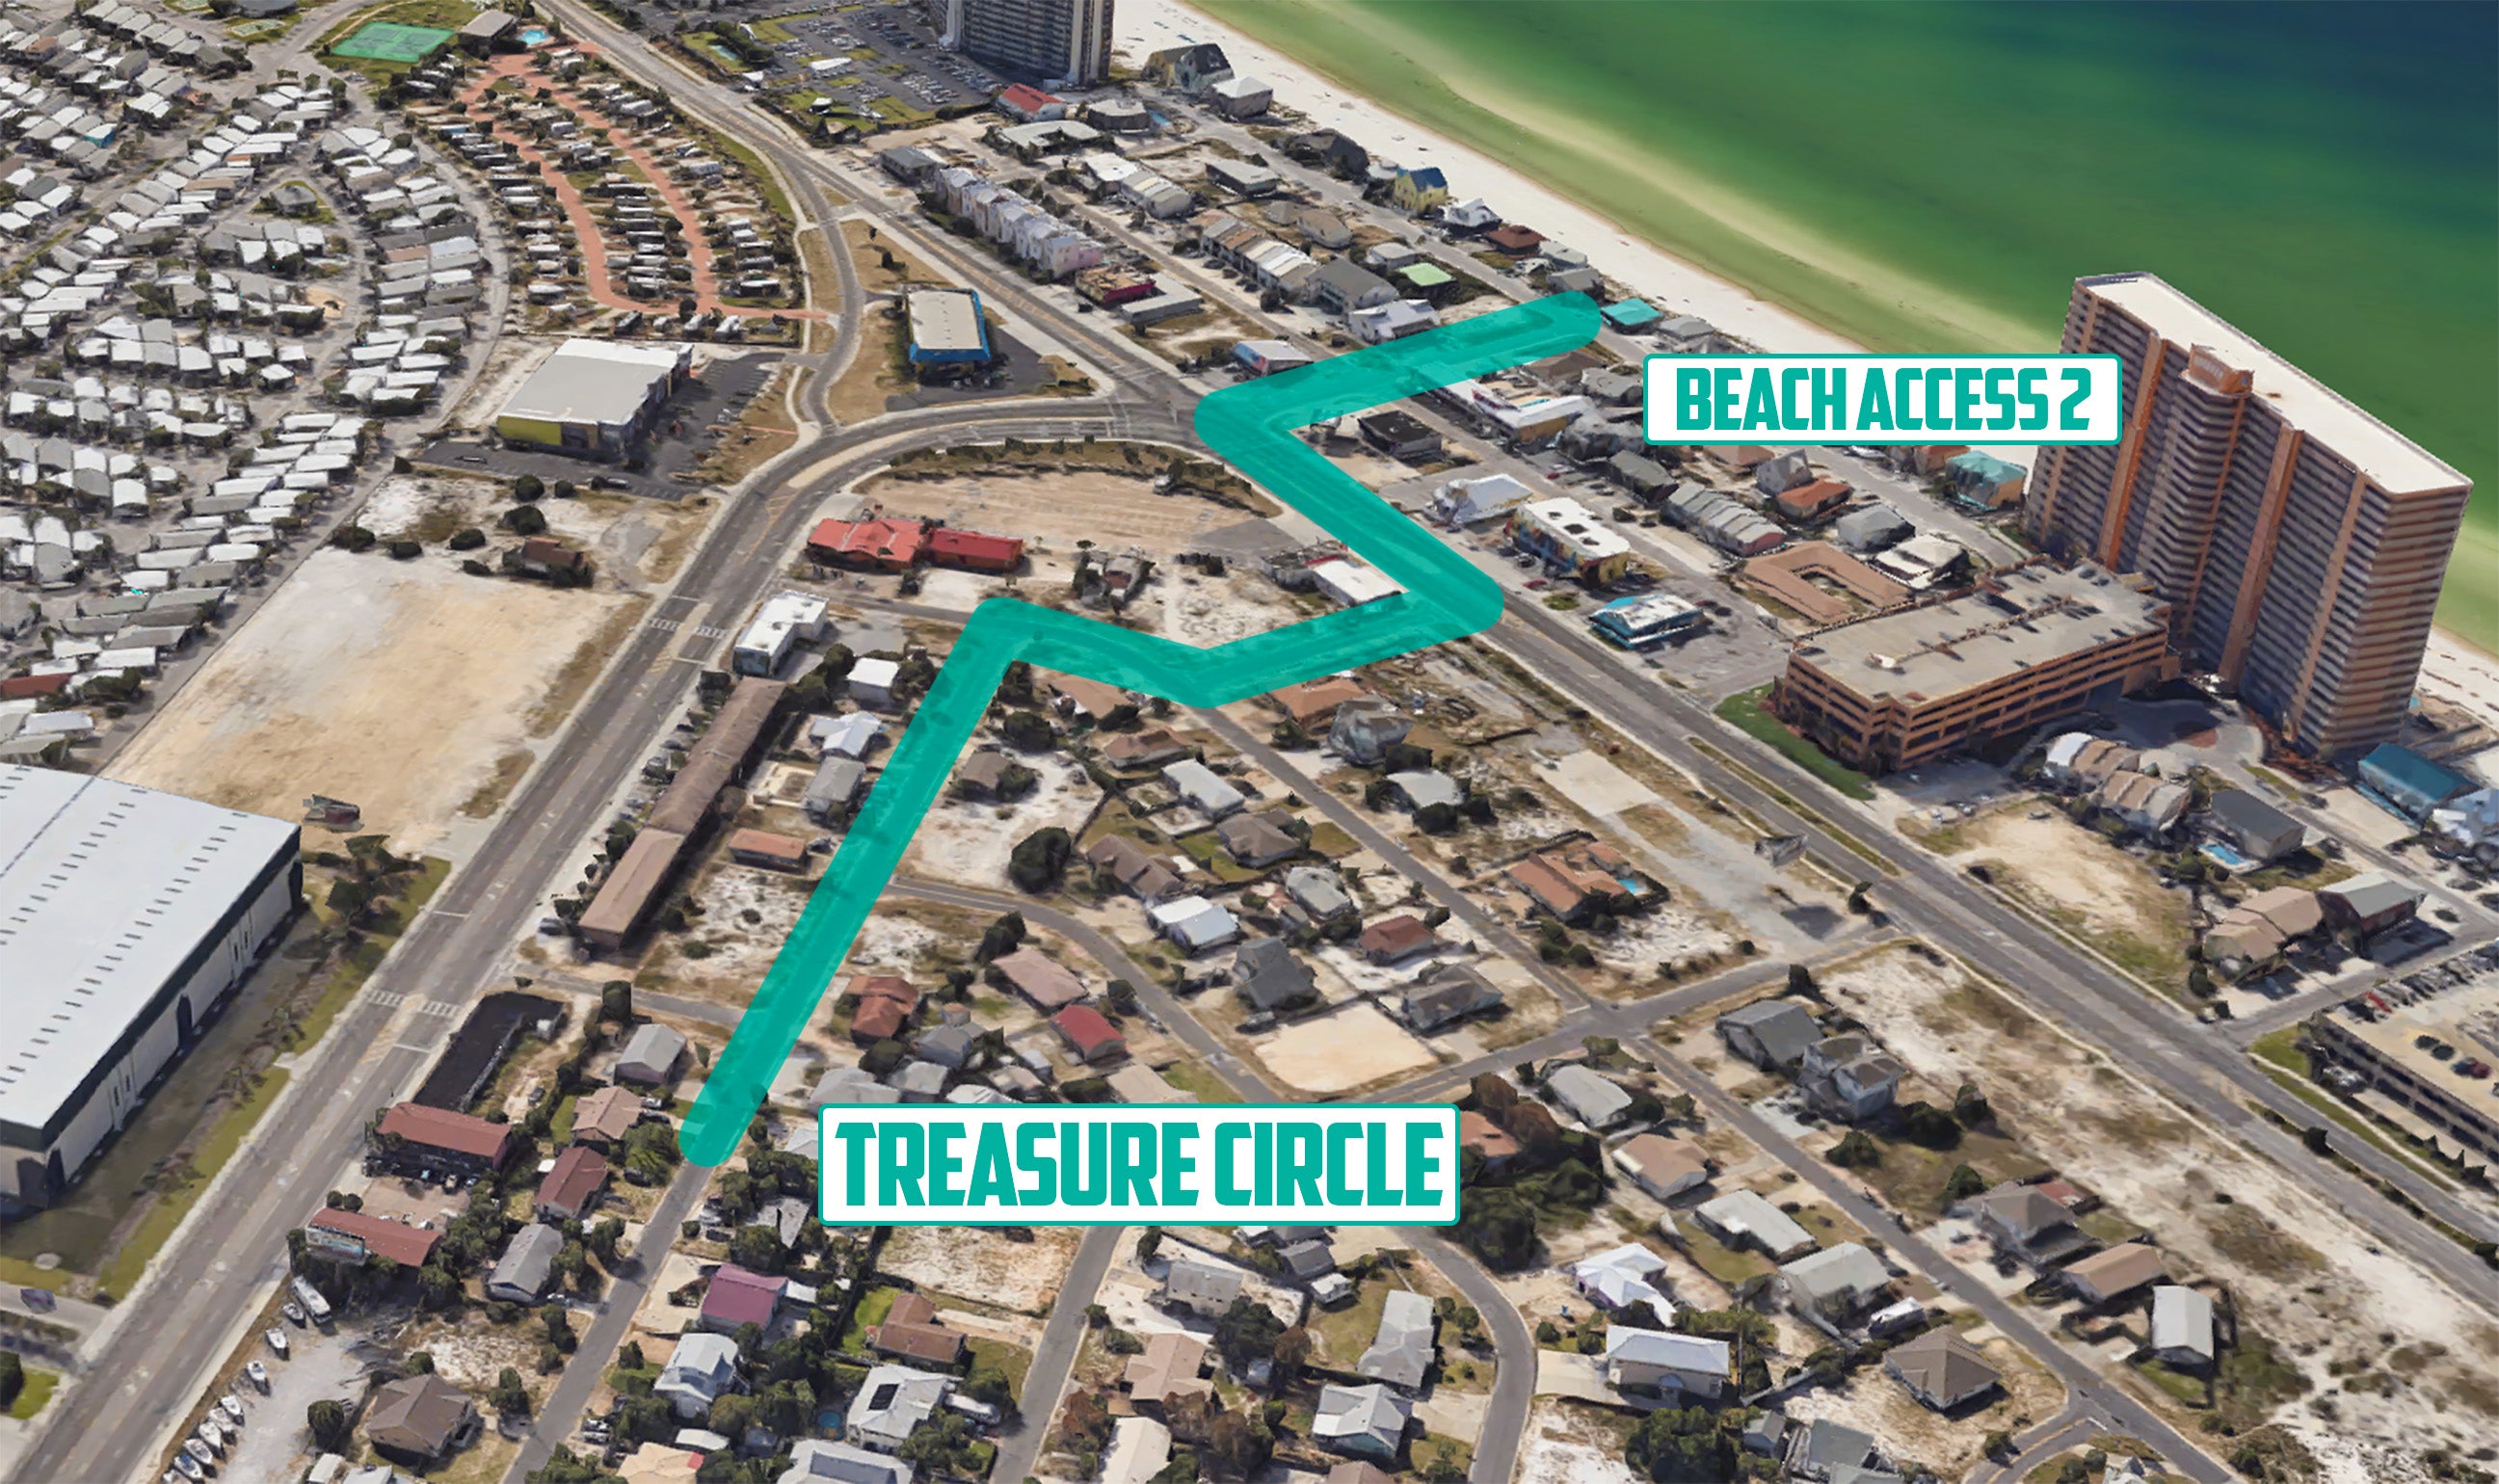 Treasure Circle Beach Access